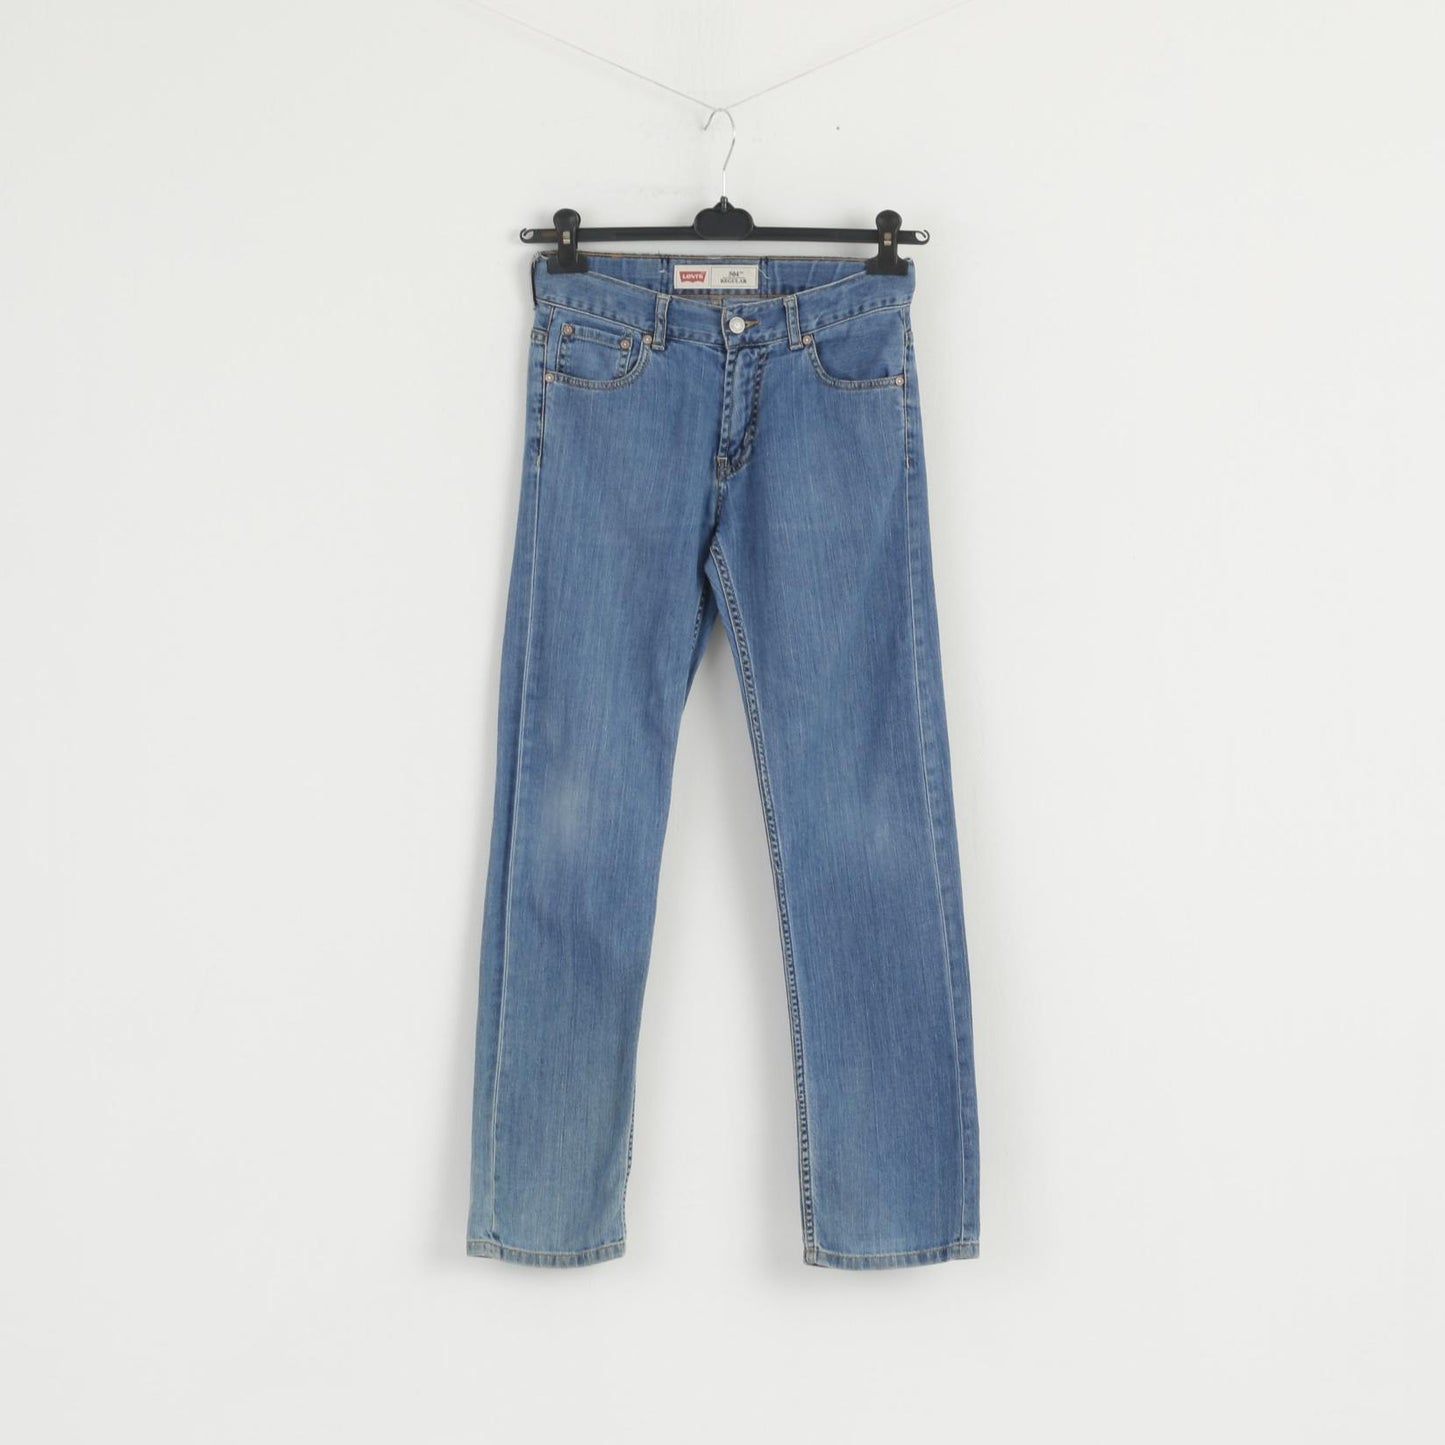 Levi's Girls 14 Age Trousers Blue Jeans Denim Regular 504 Cotton Skinny Pants